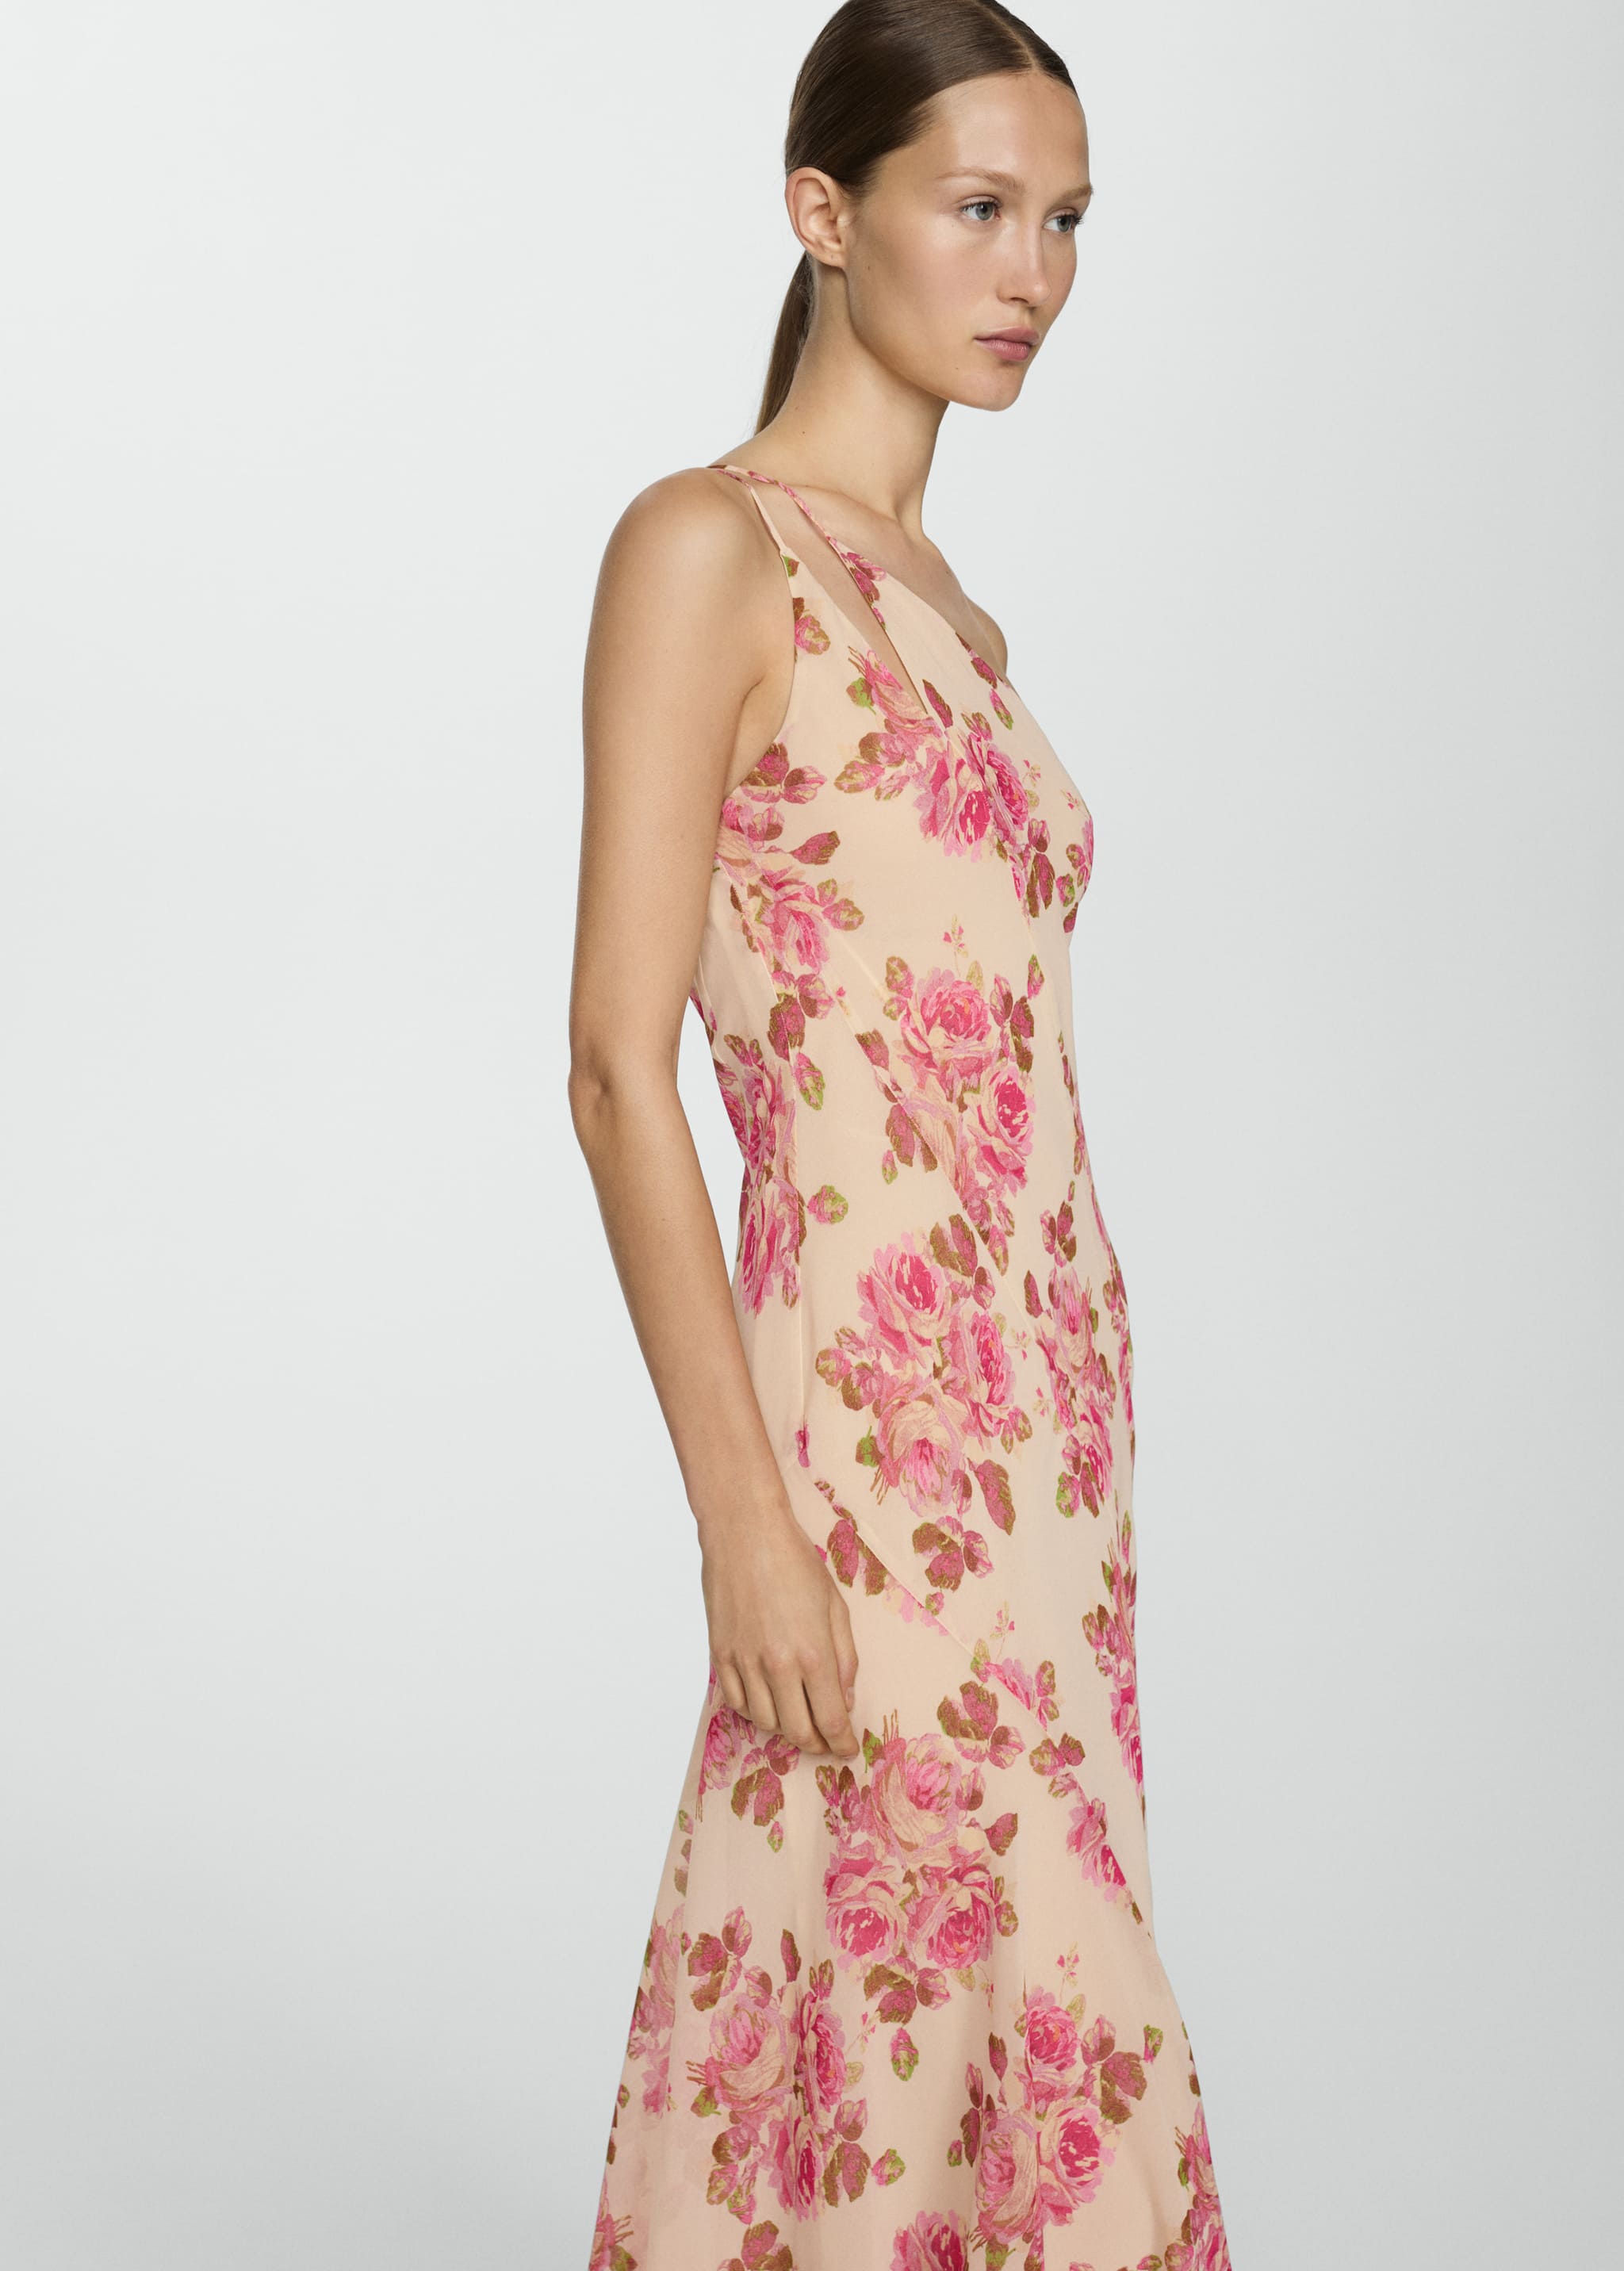 Asymmetrical floral dress - Medium plane